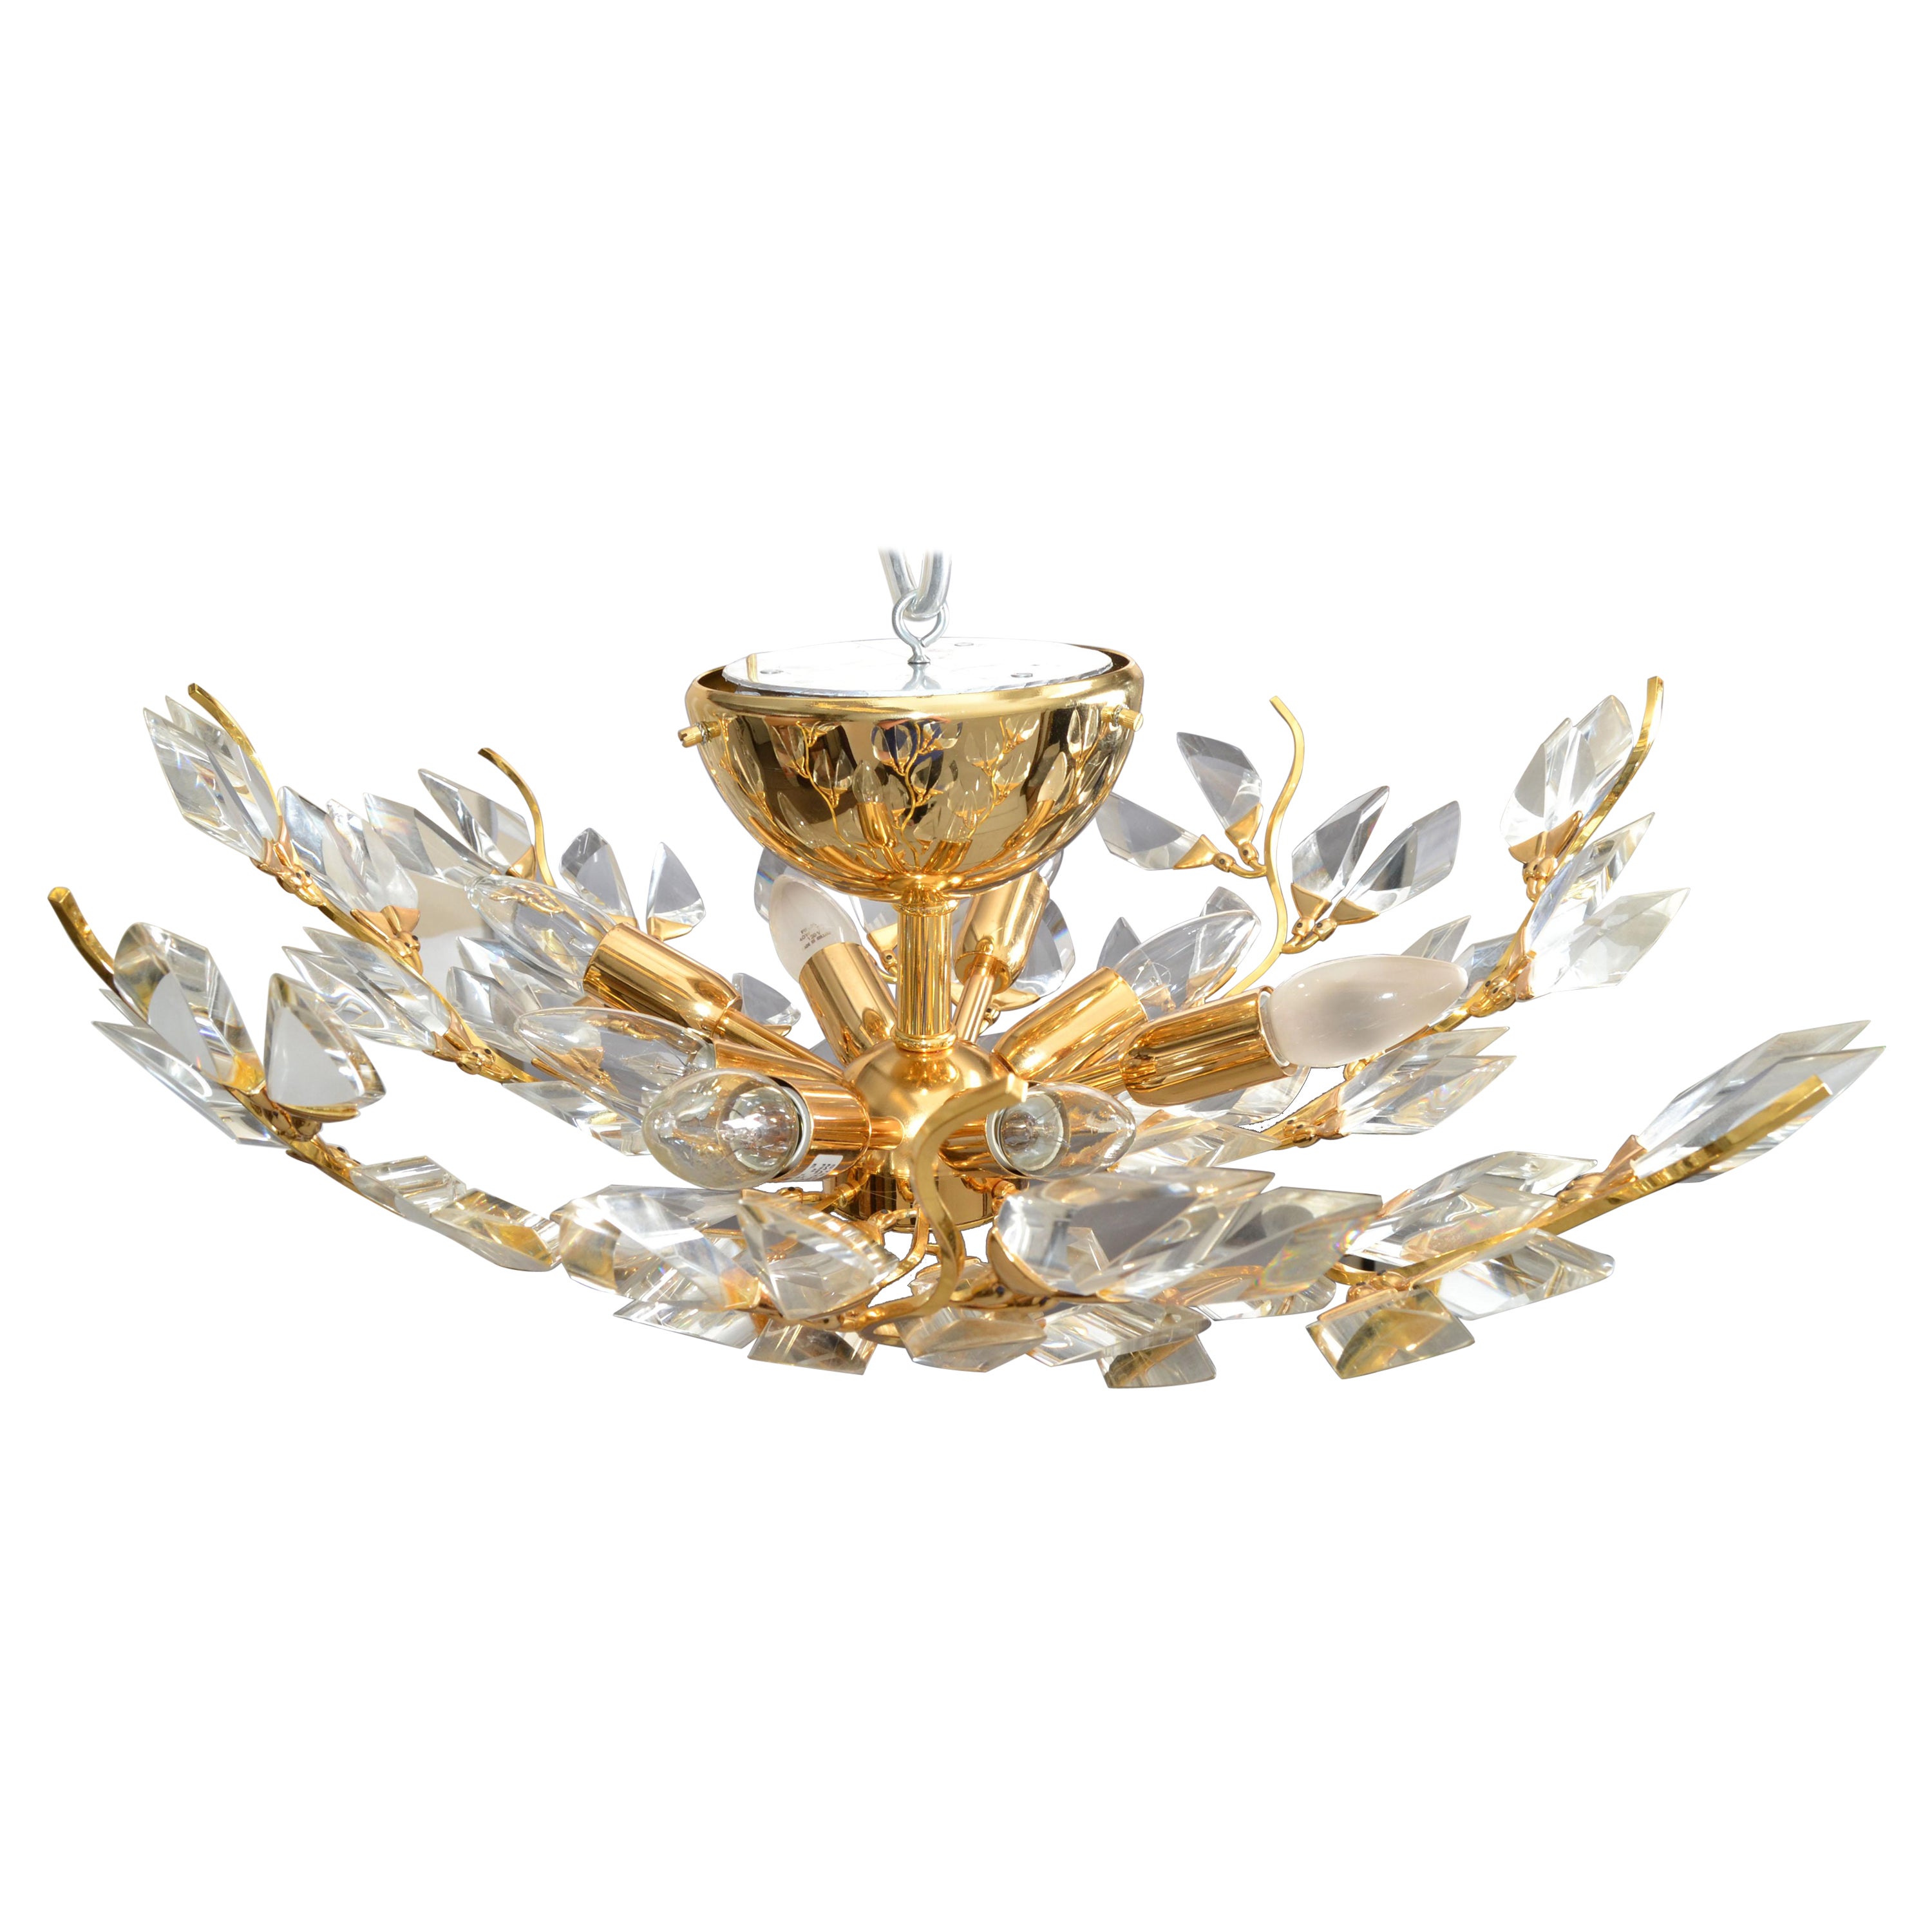 Stilkronen Mid-Century Modern 8 Light Gold Plate Brass &Crystal Chandelier Italy For Sale